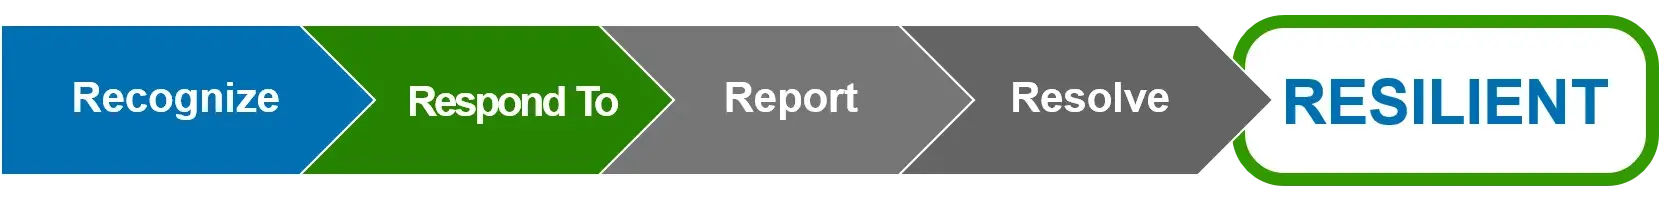 Chevron graphic: Recognize - Respond To - Report - Resolve - Resilient